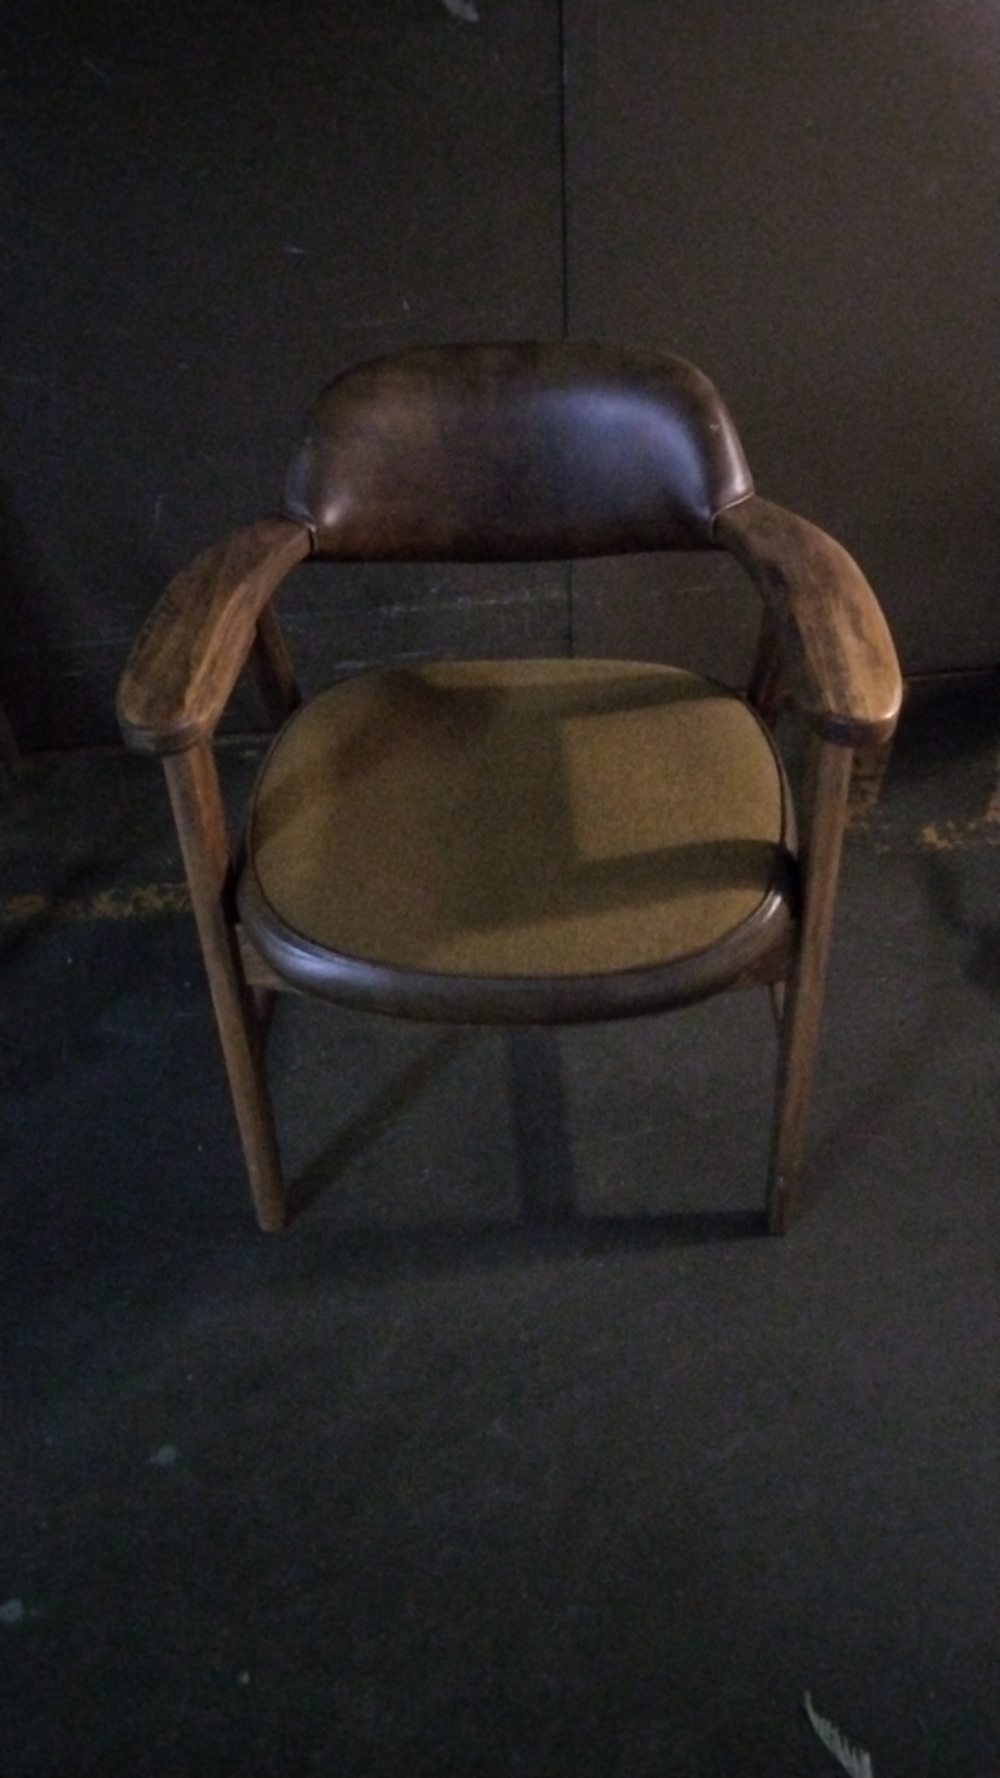  Guest Chair